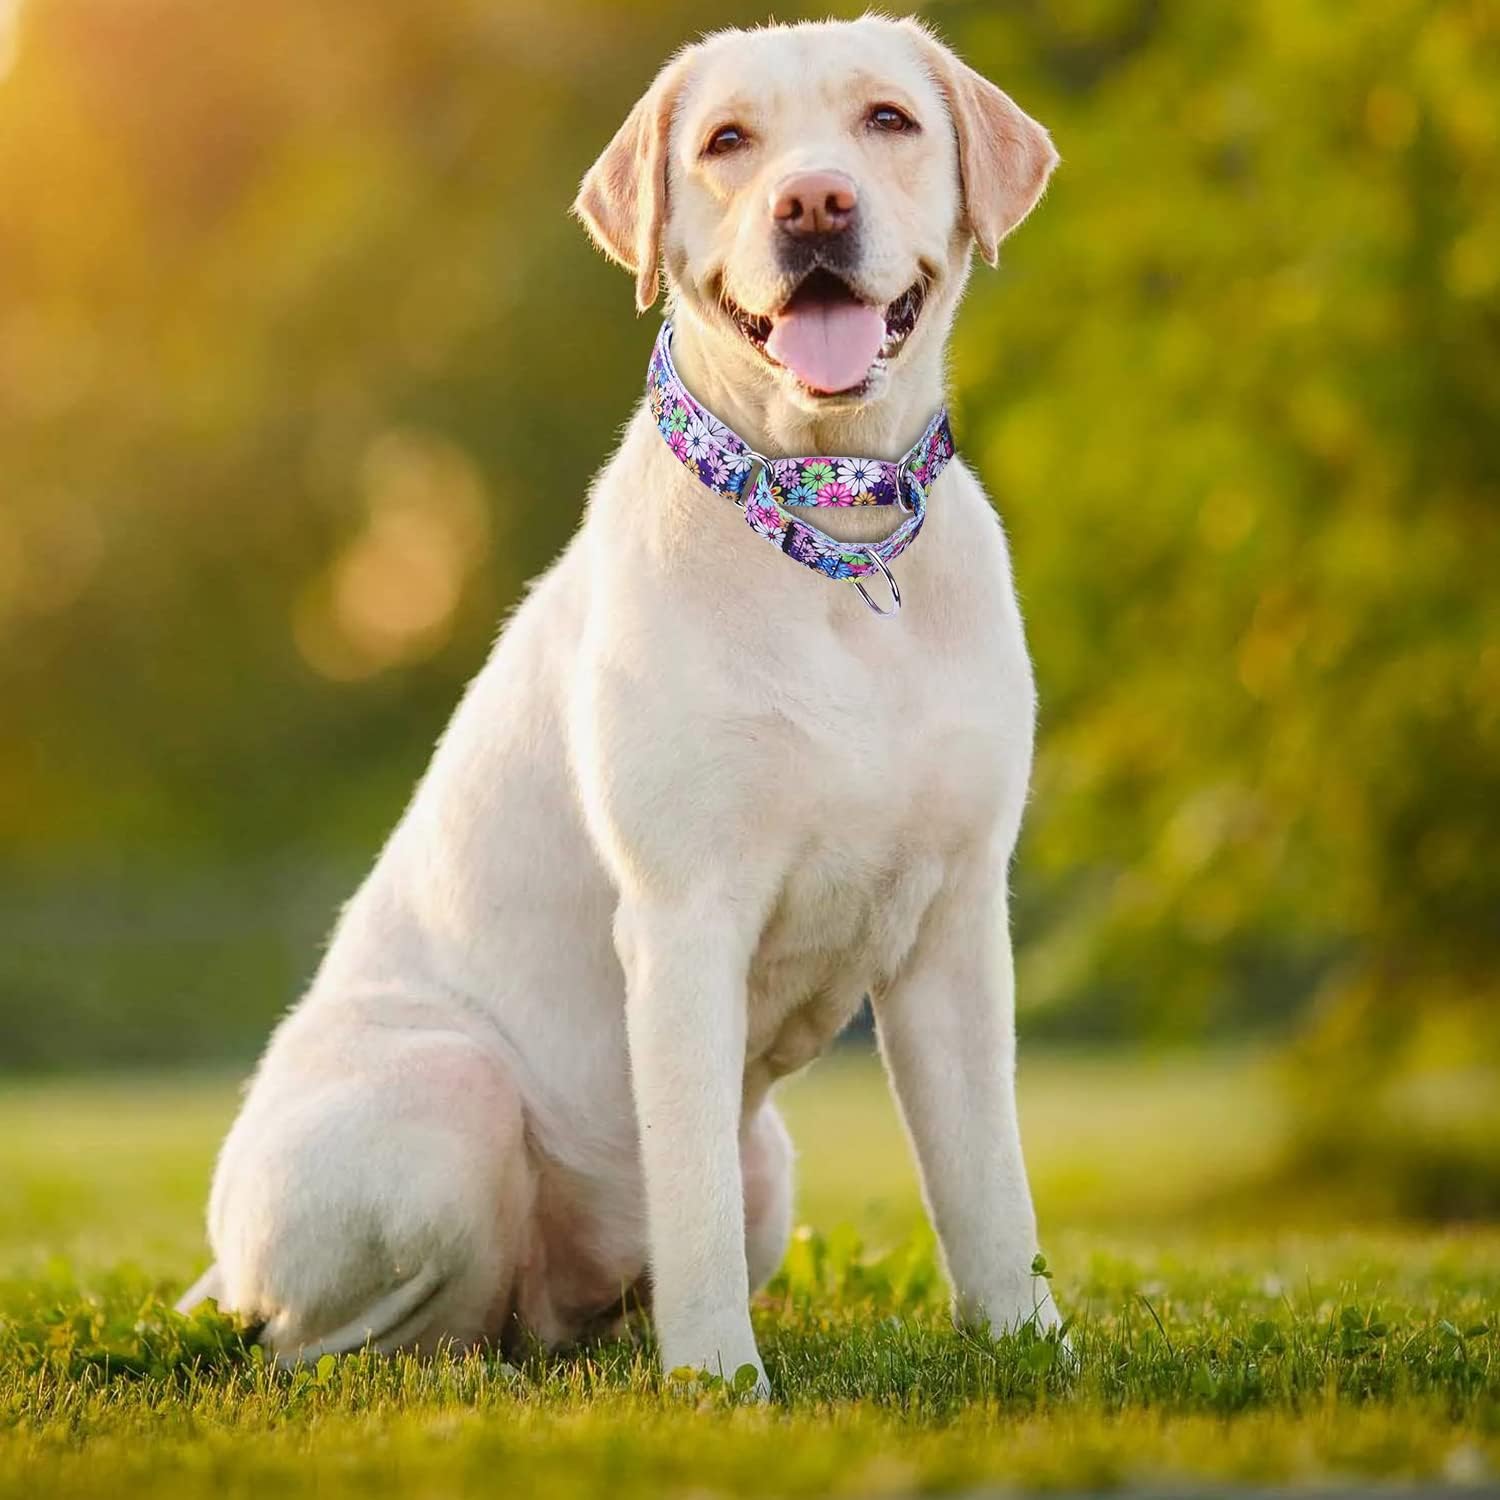 Heavy Duty Nylon Dog Collar, Adjustable Martingale Dog Collar for Walking Training Boy and Girl Dogs Medium Large Dogs (M:36-45CM, Green)